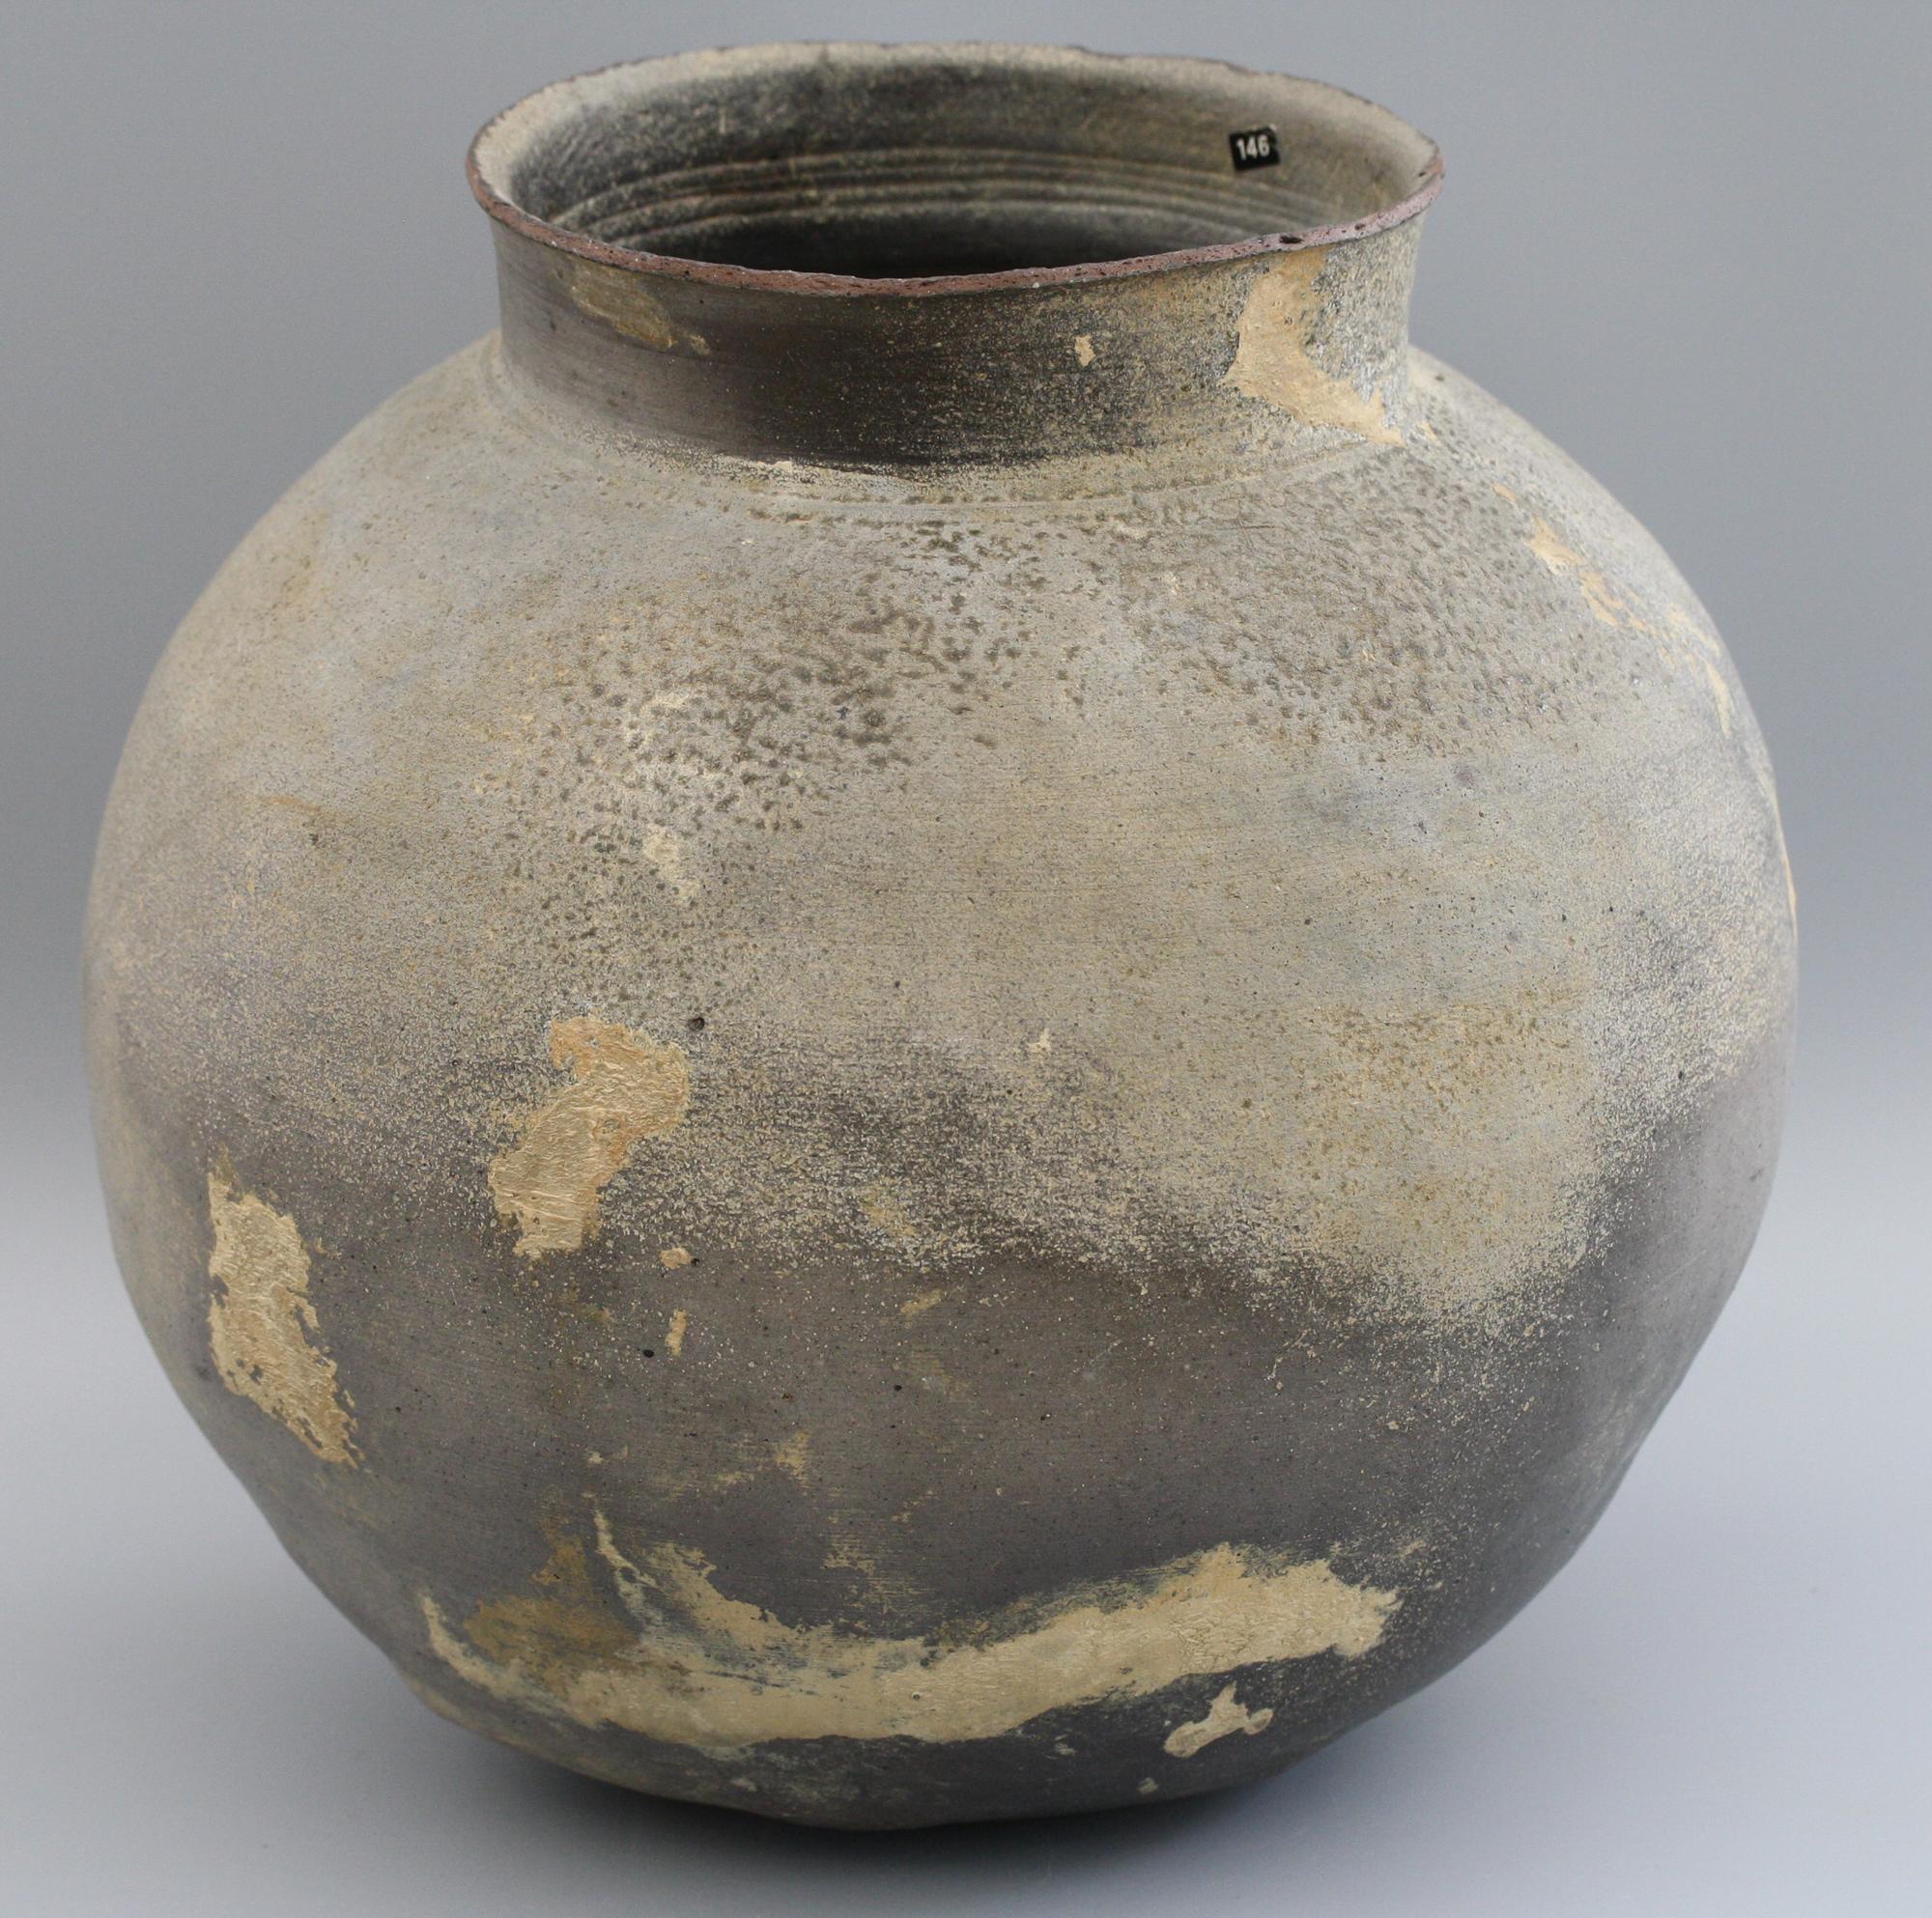 Chinese Han Dynasty Ash Glazed Pottery Jar 206BC-220AD 10